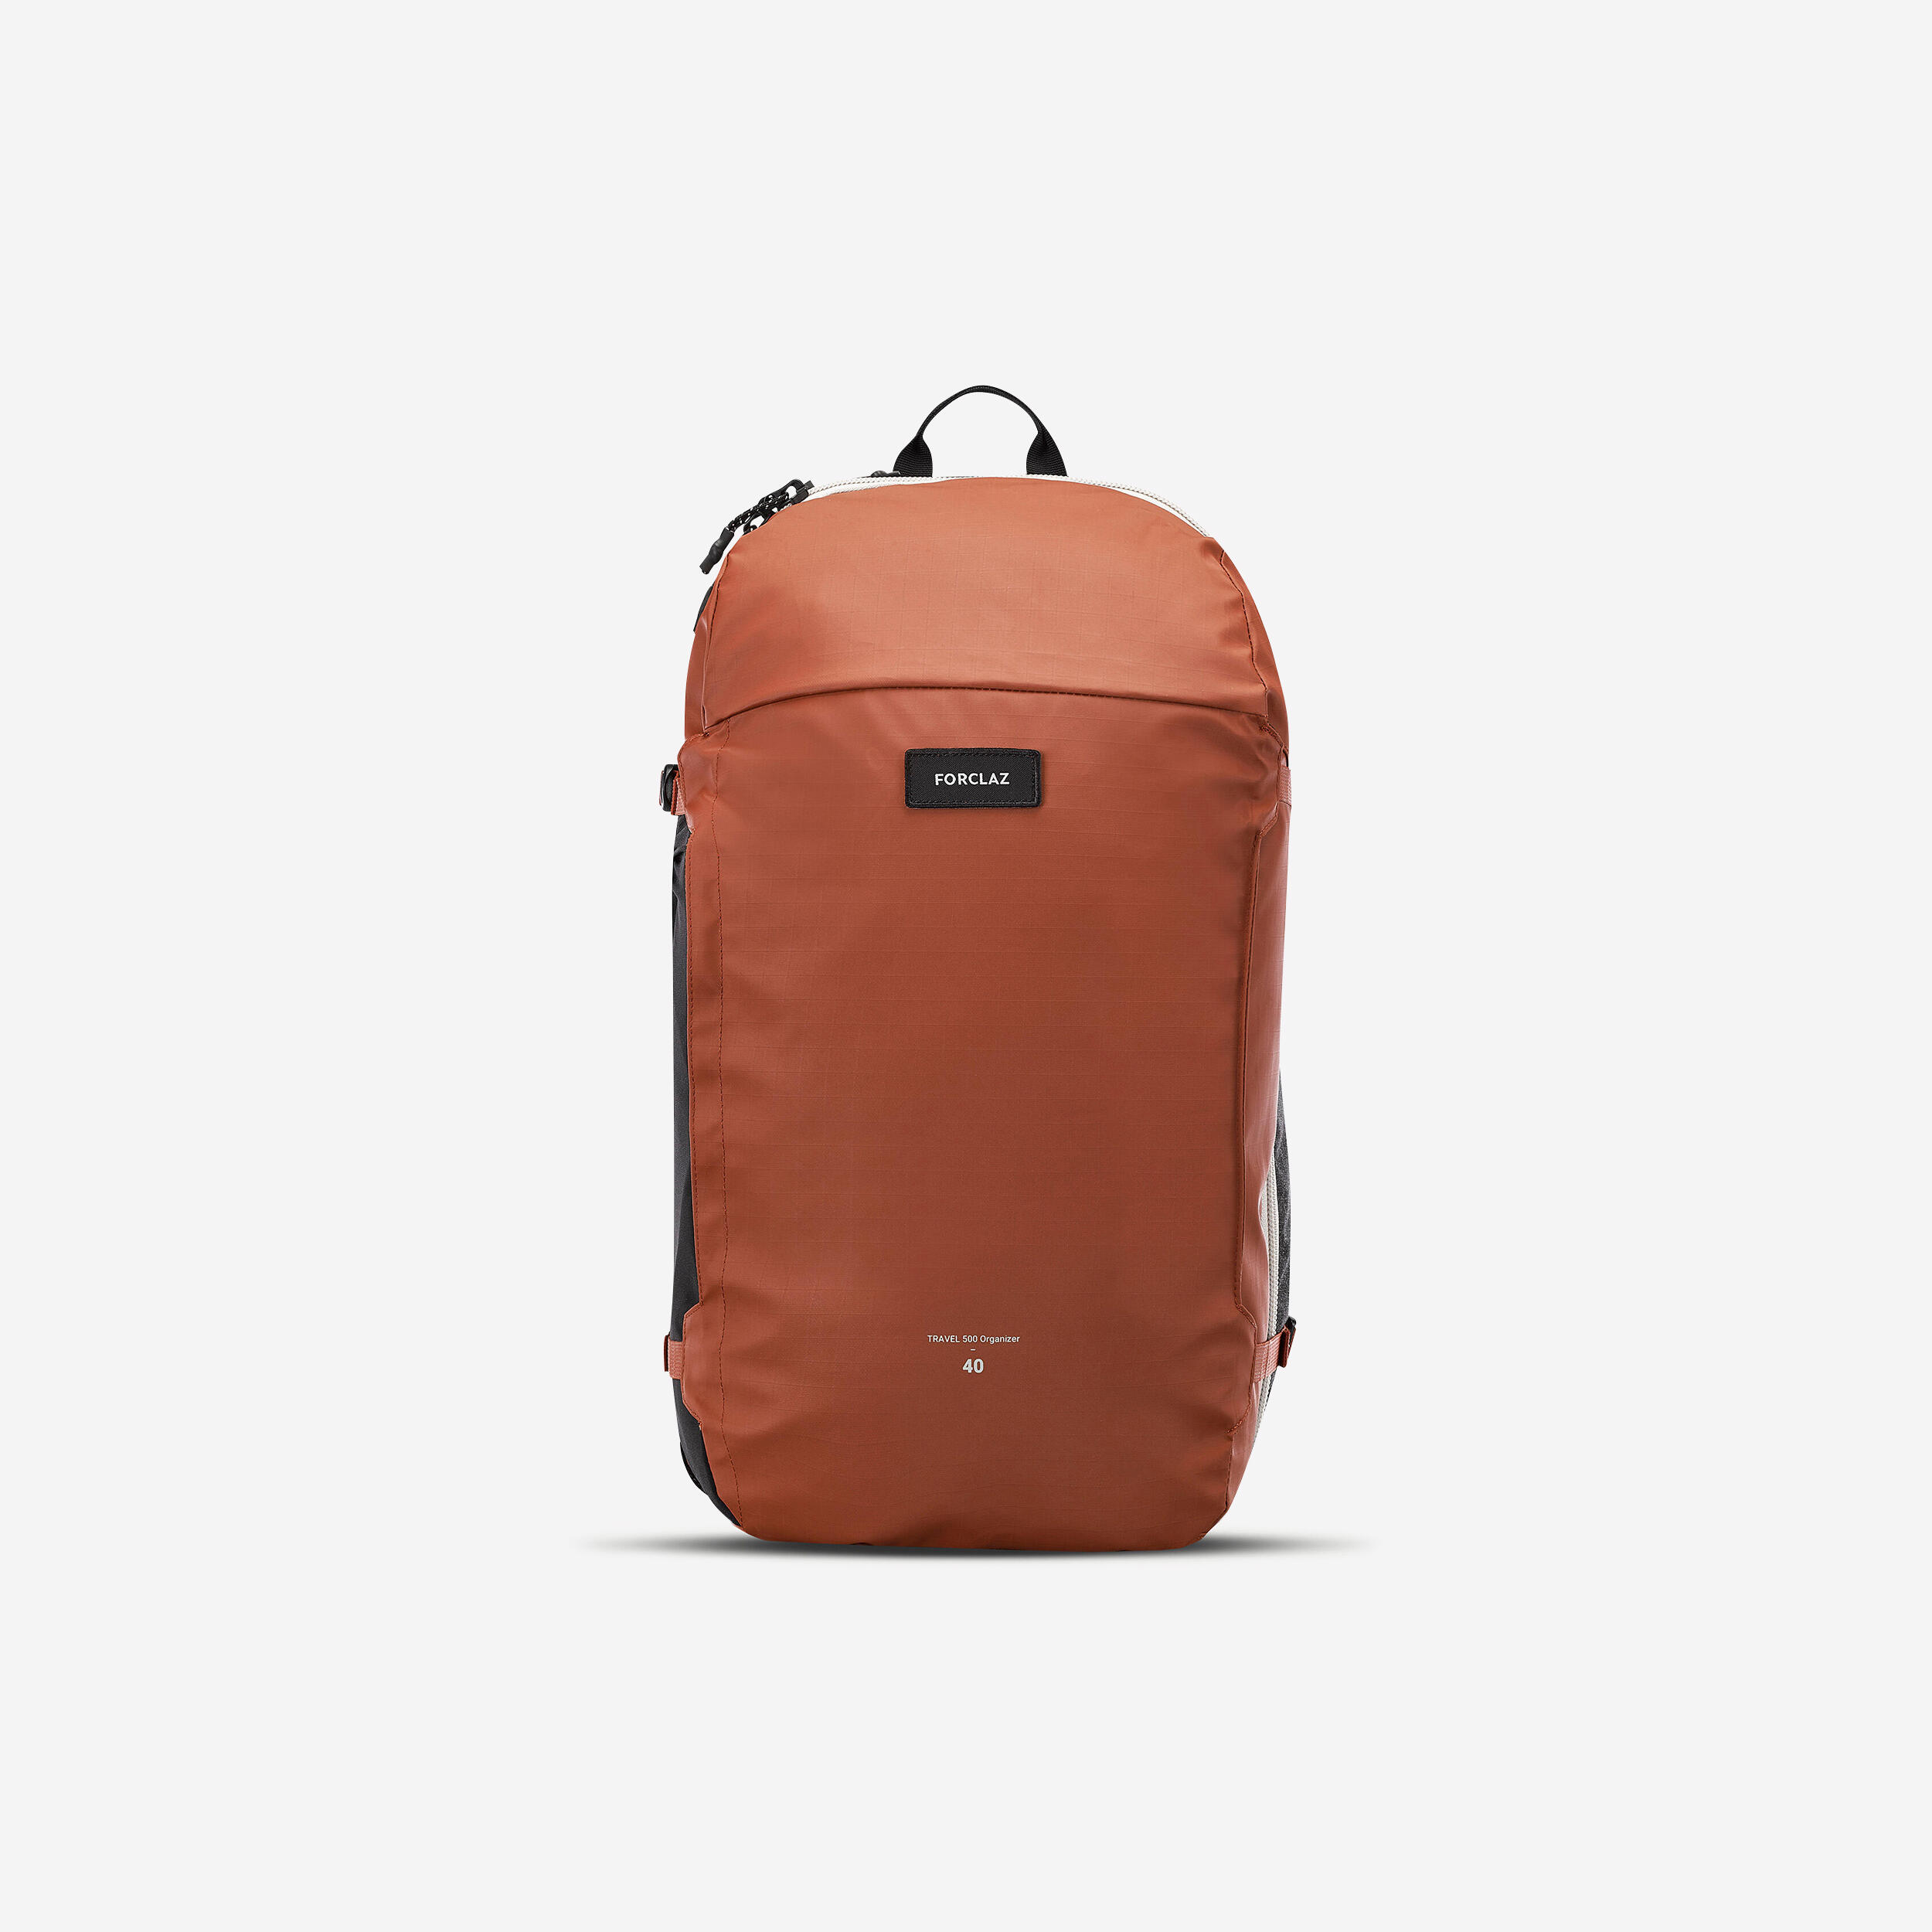 FORCLAZ Travel Backpack 40 L - Travel 500 ORGANIZER Orange